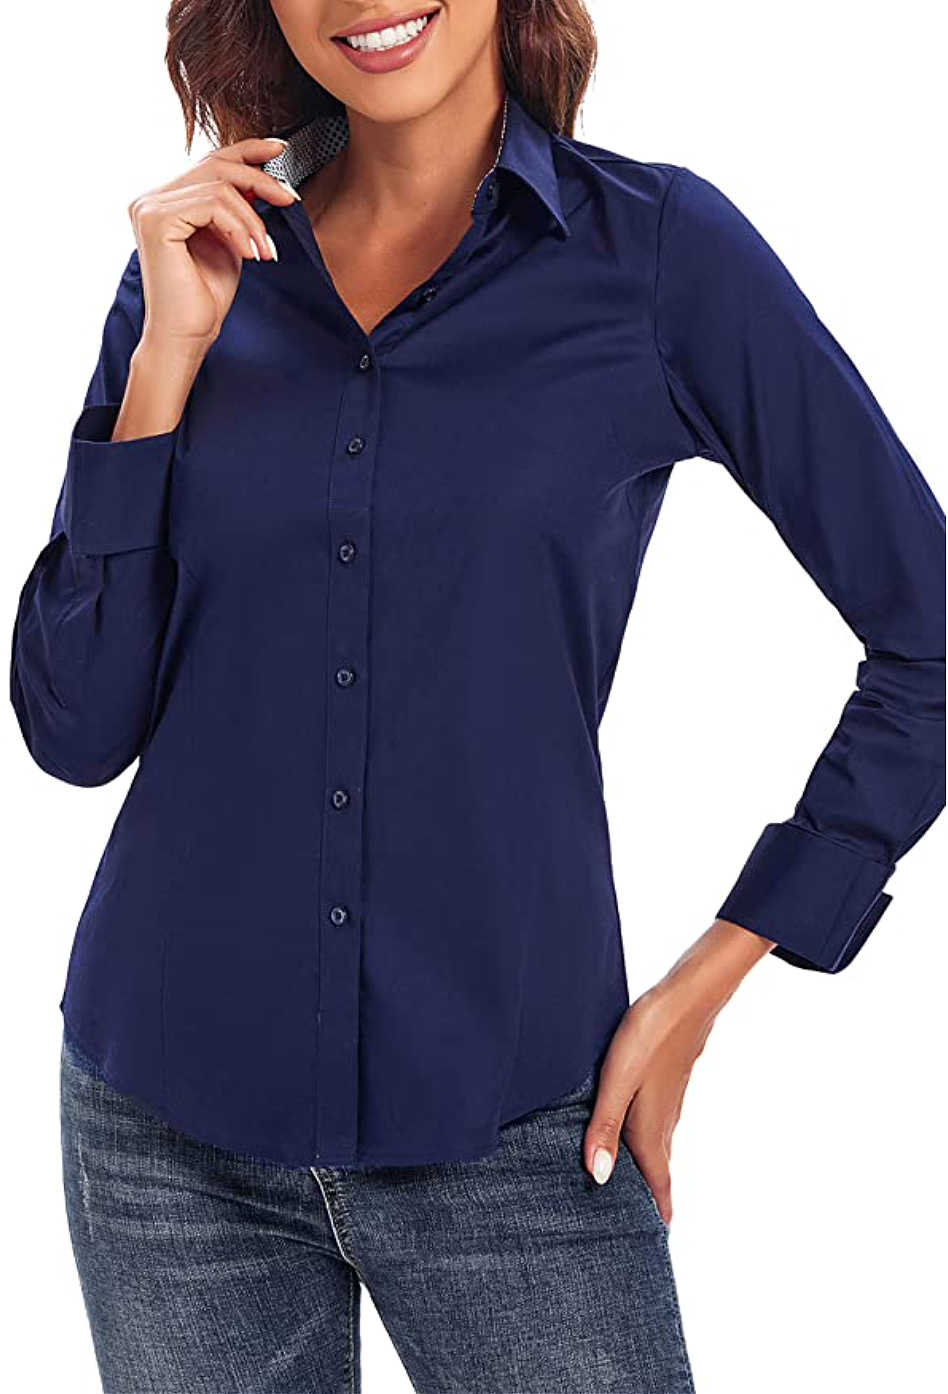 Charles Jeffrey Blue Cotton Shirt Womens Clothing Tops Shirts 